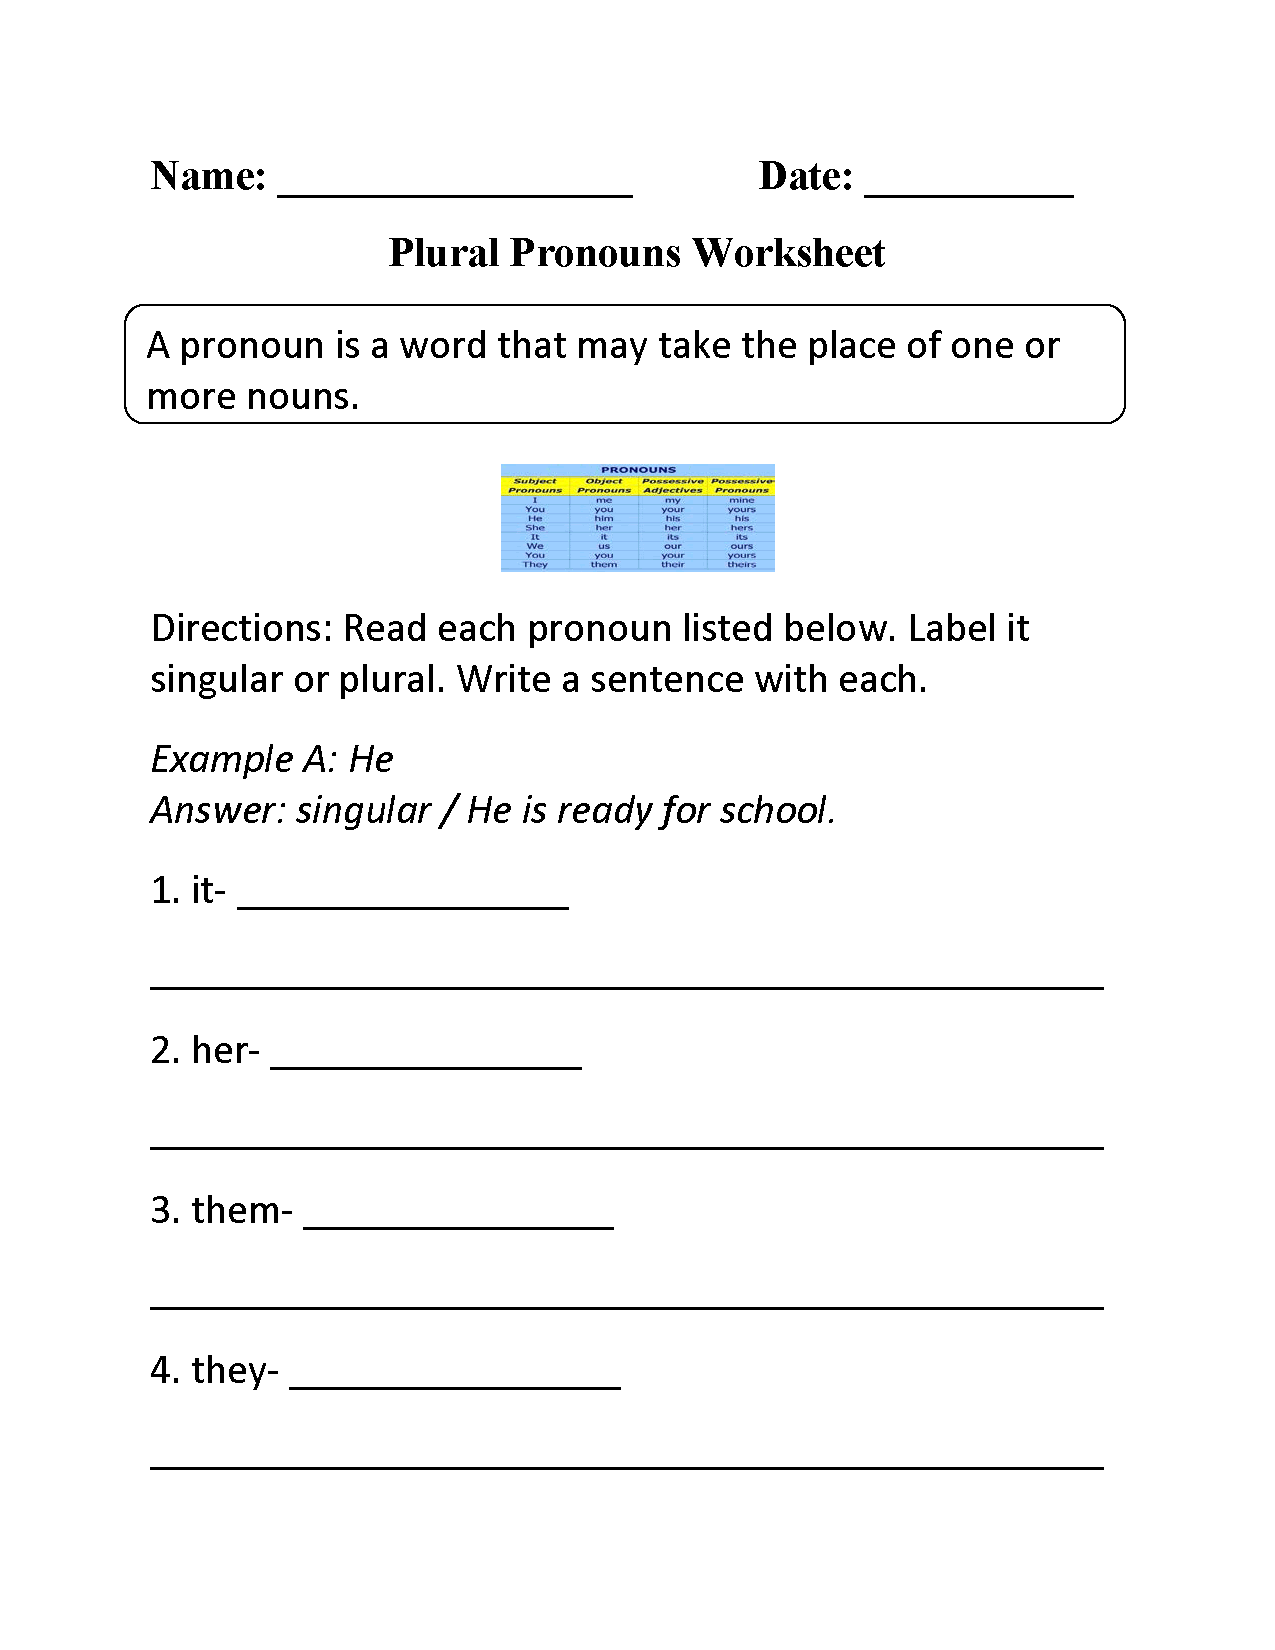 Plural Pronouns Worksheet